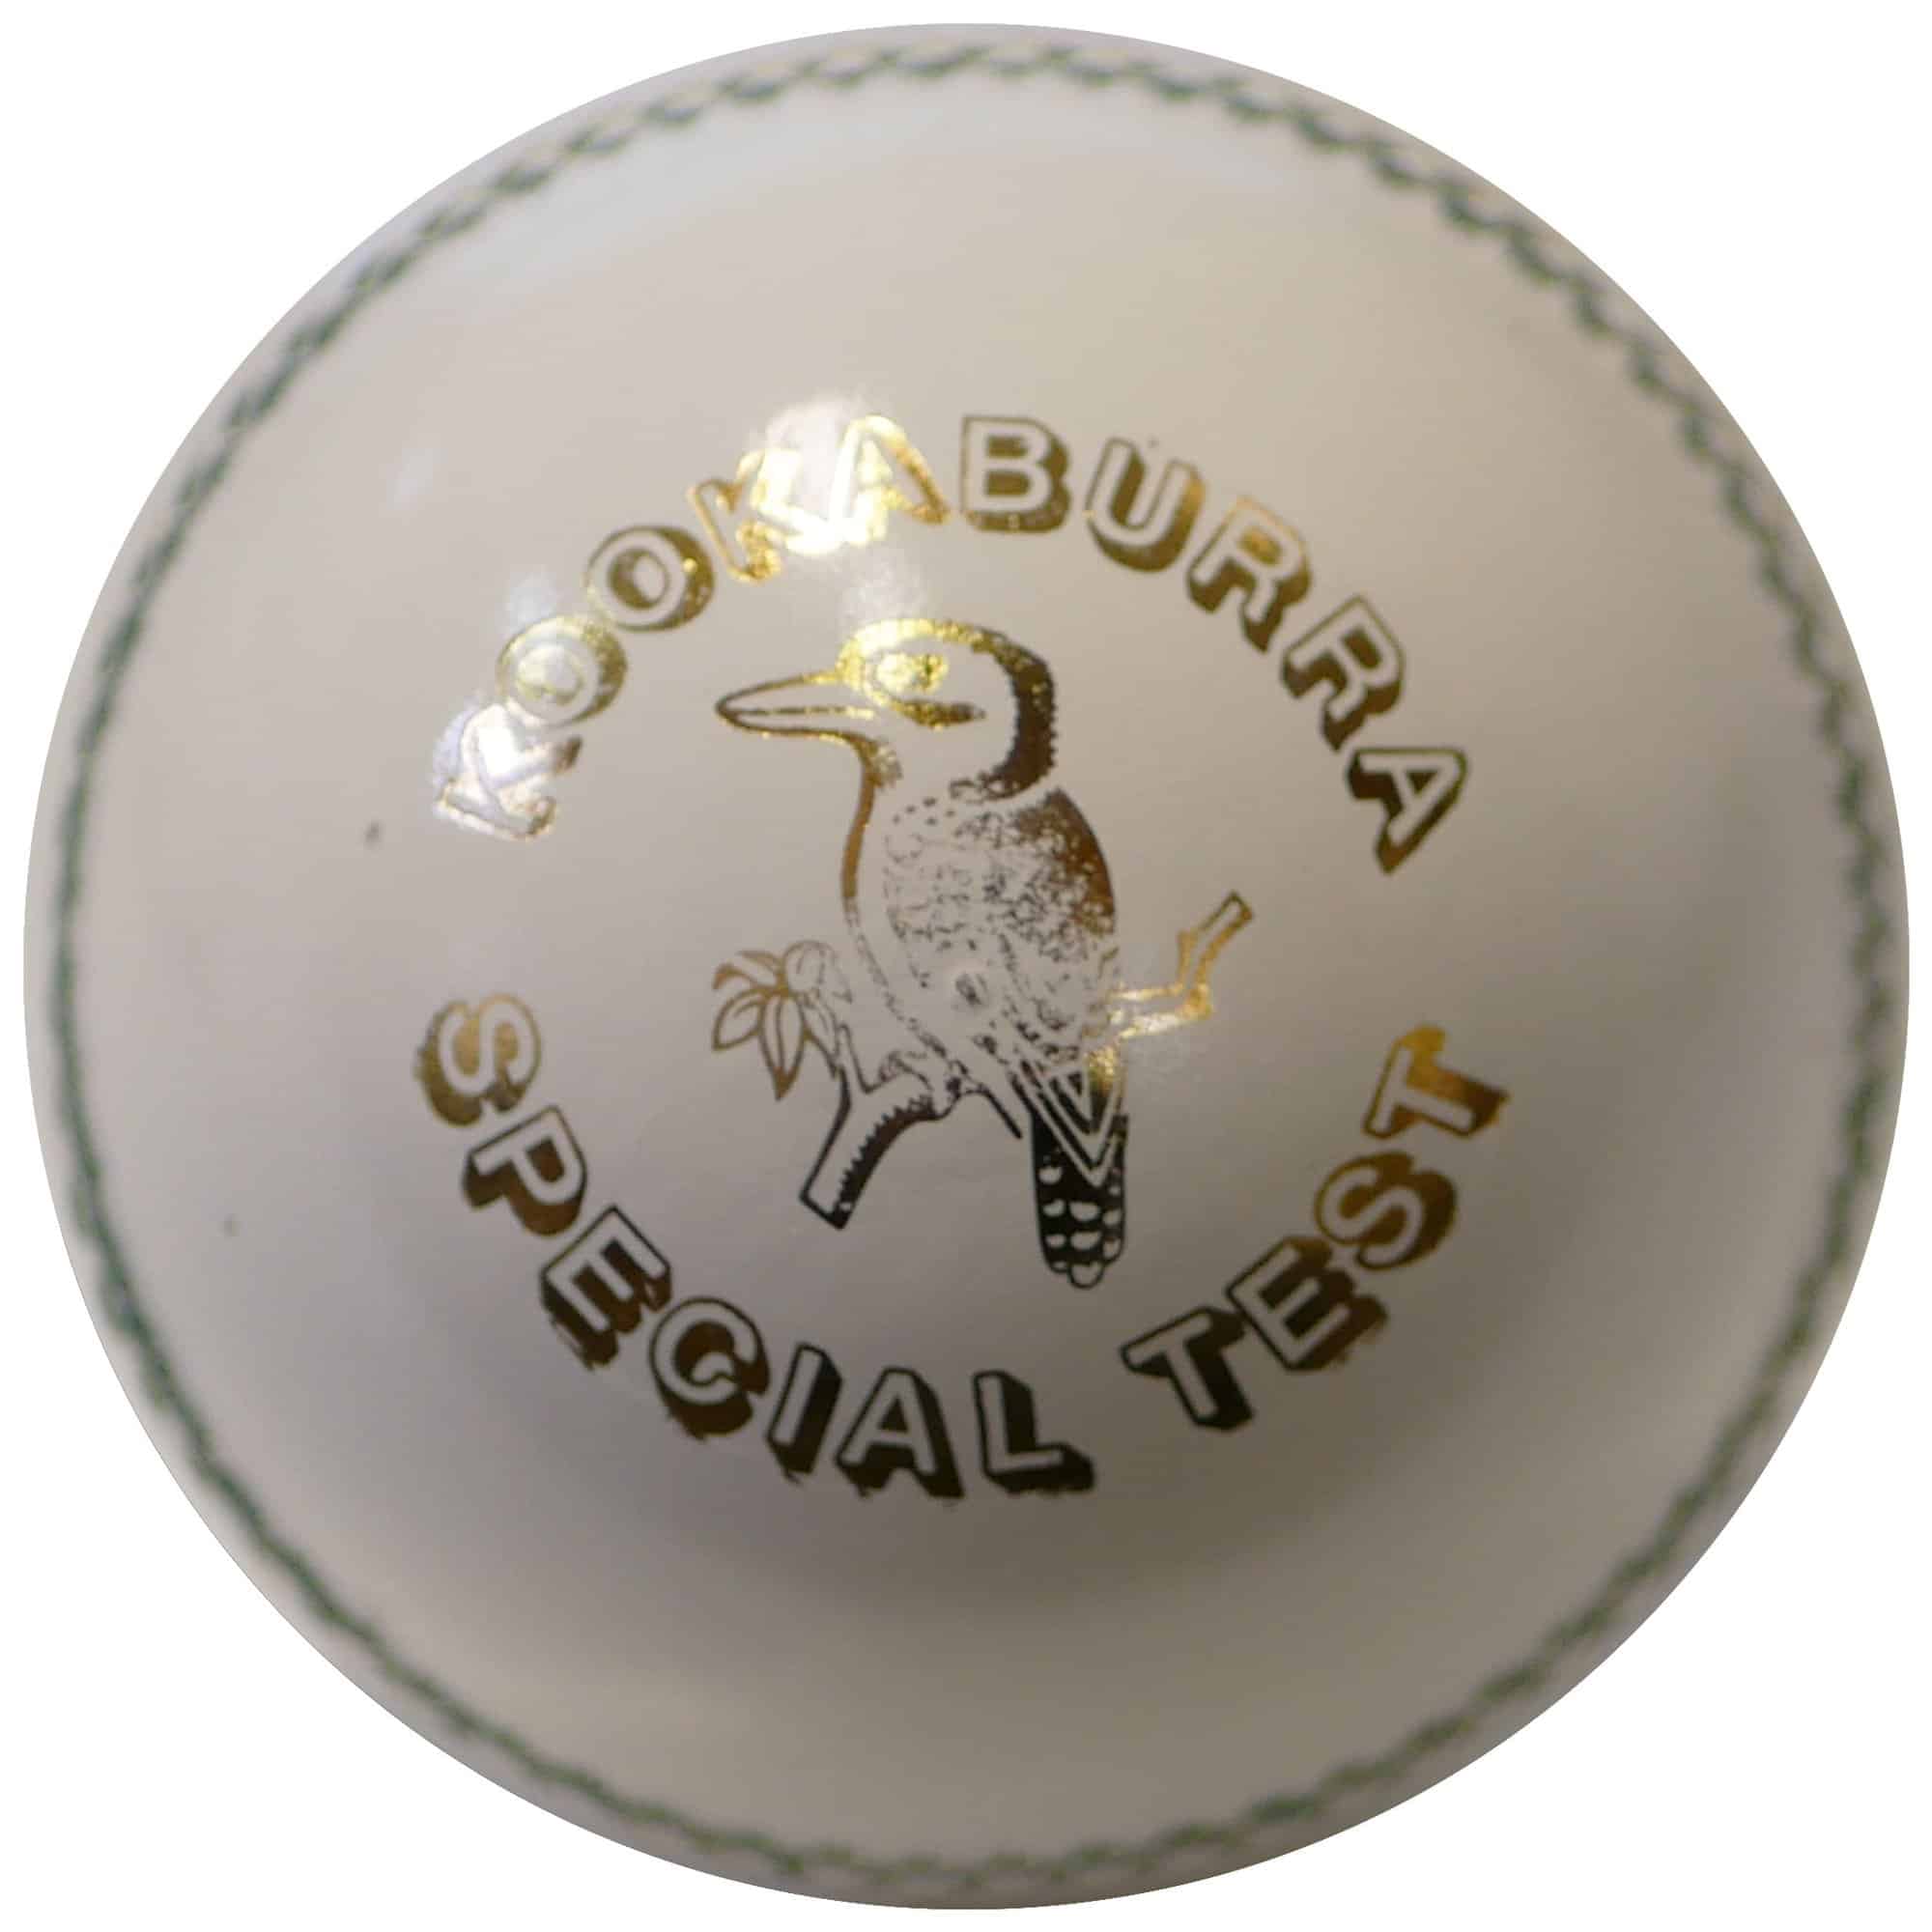 Special Test White Kookaburra Cricket Ball